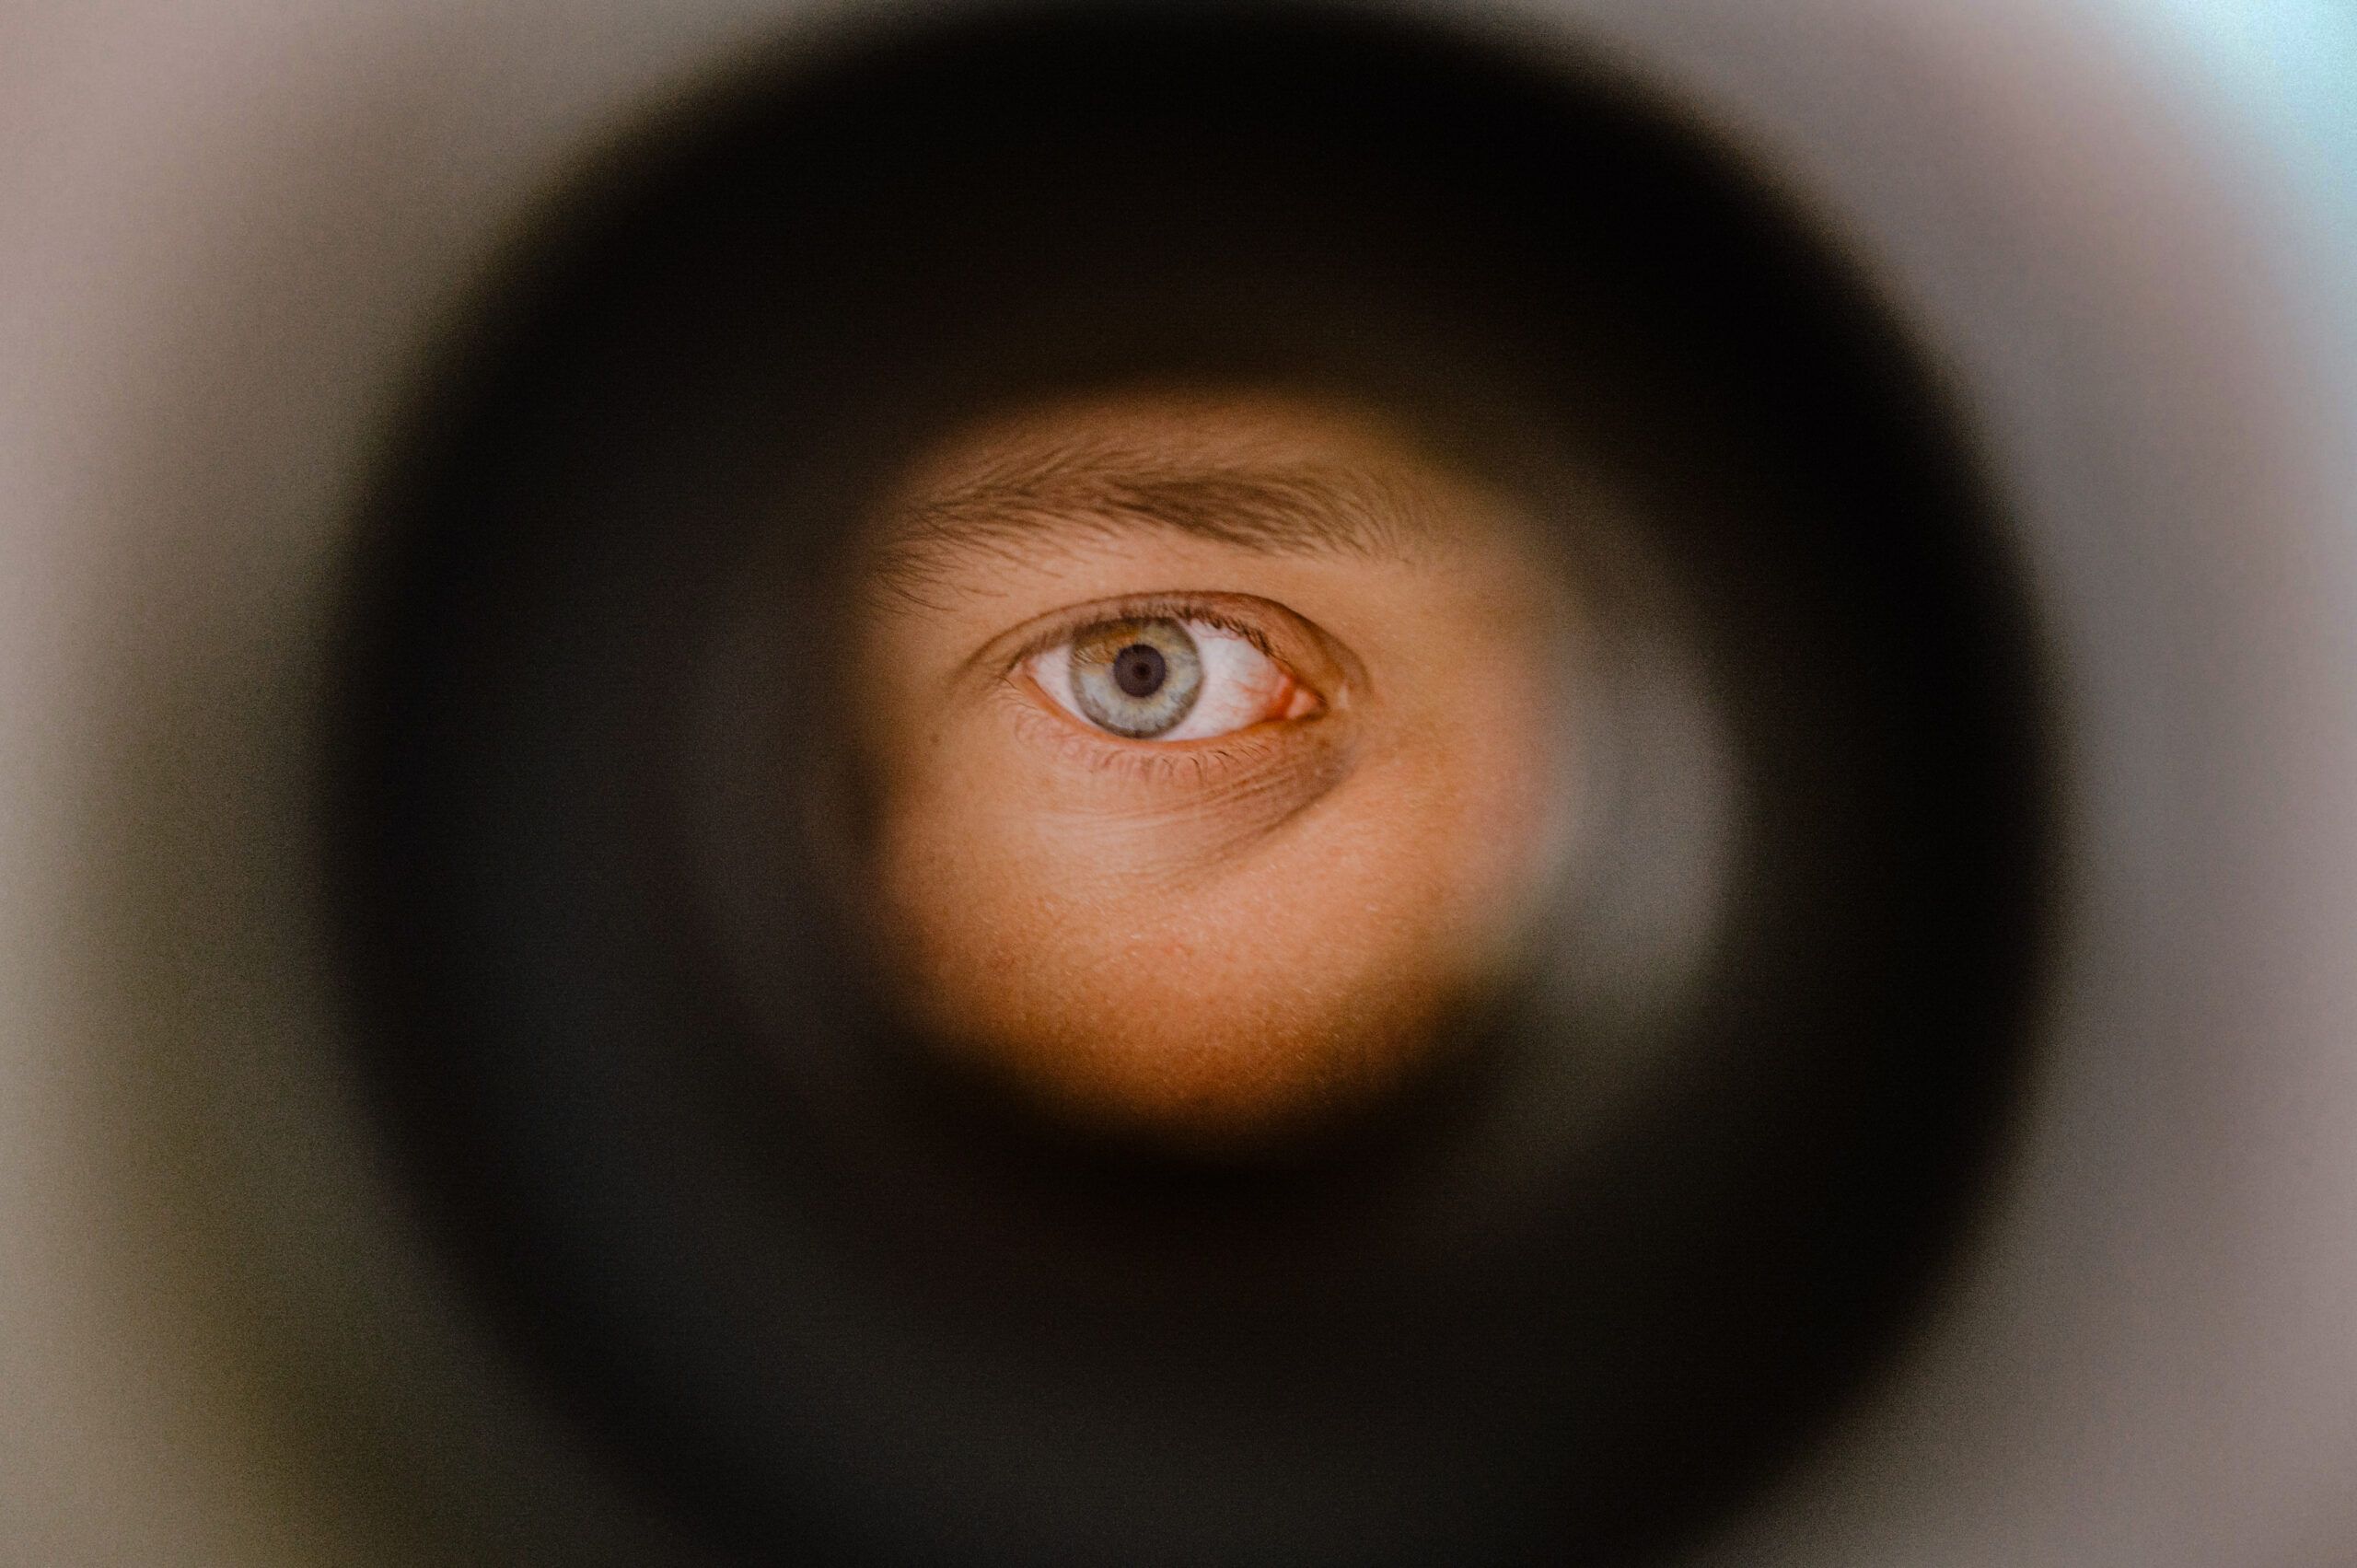 Eye Looking through a peephole